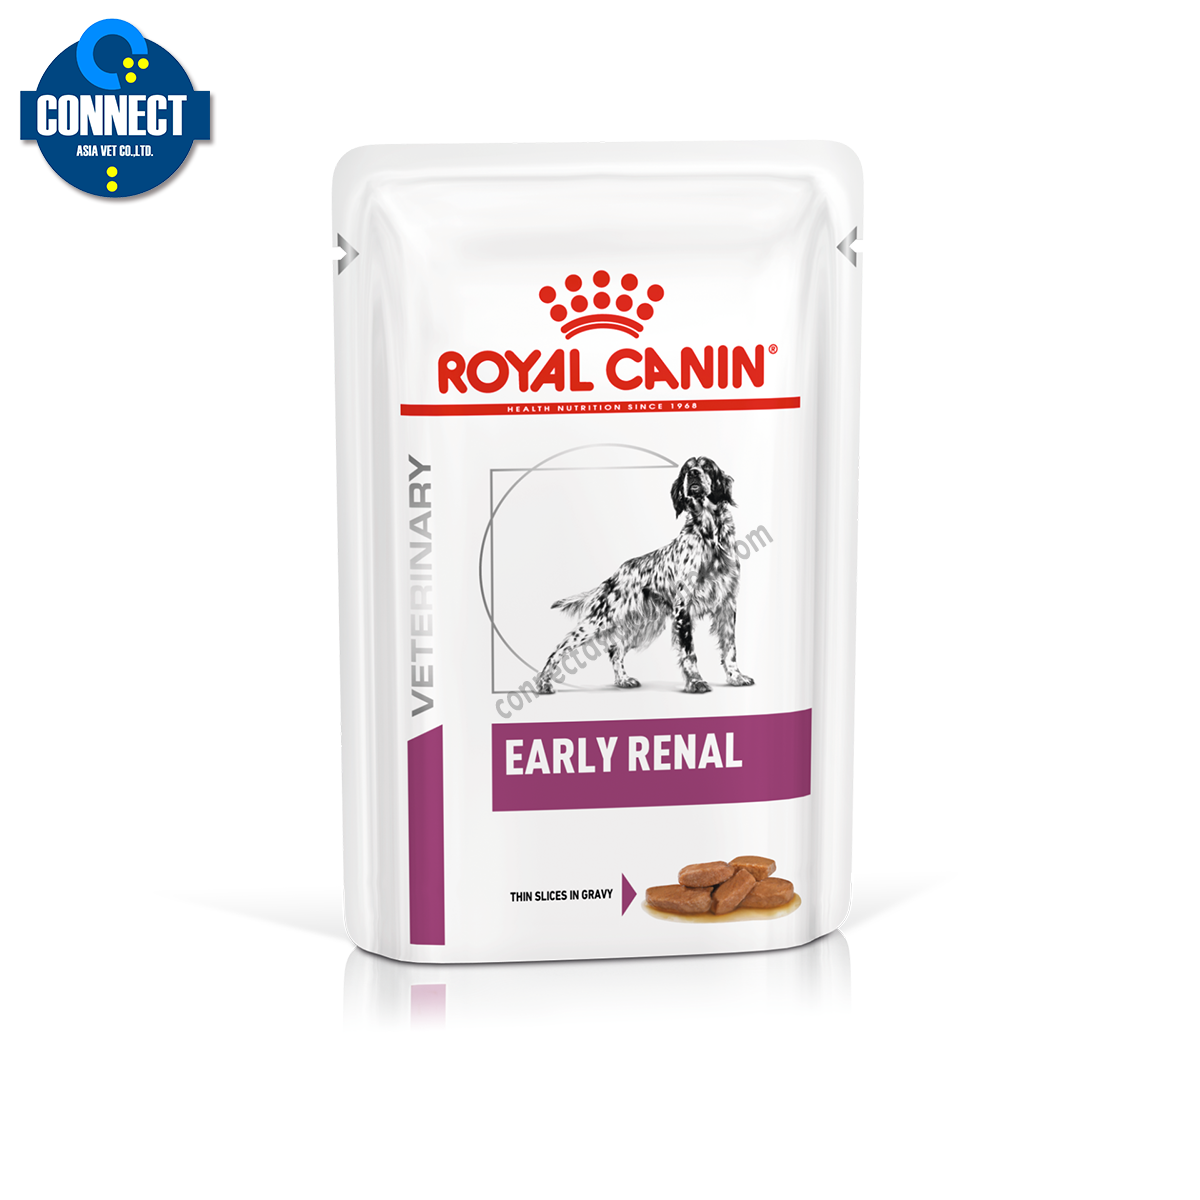 Royal Canin EARLY RENAL  สุนัขโรคไตระยะเริ่มต้น  ขนาดถุง ( 100 กรัม ) จำนวน 12 ซอง